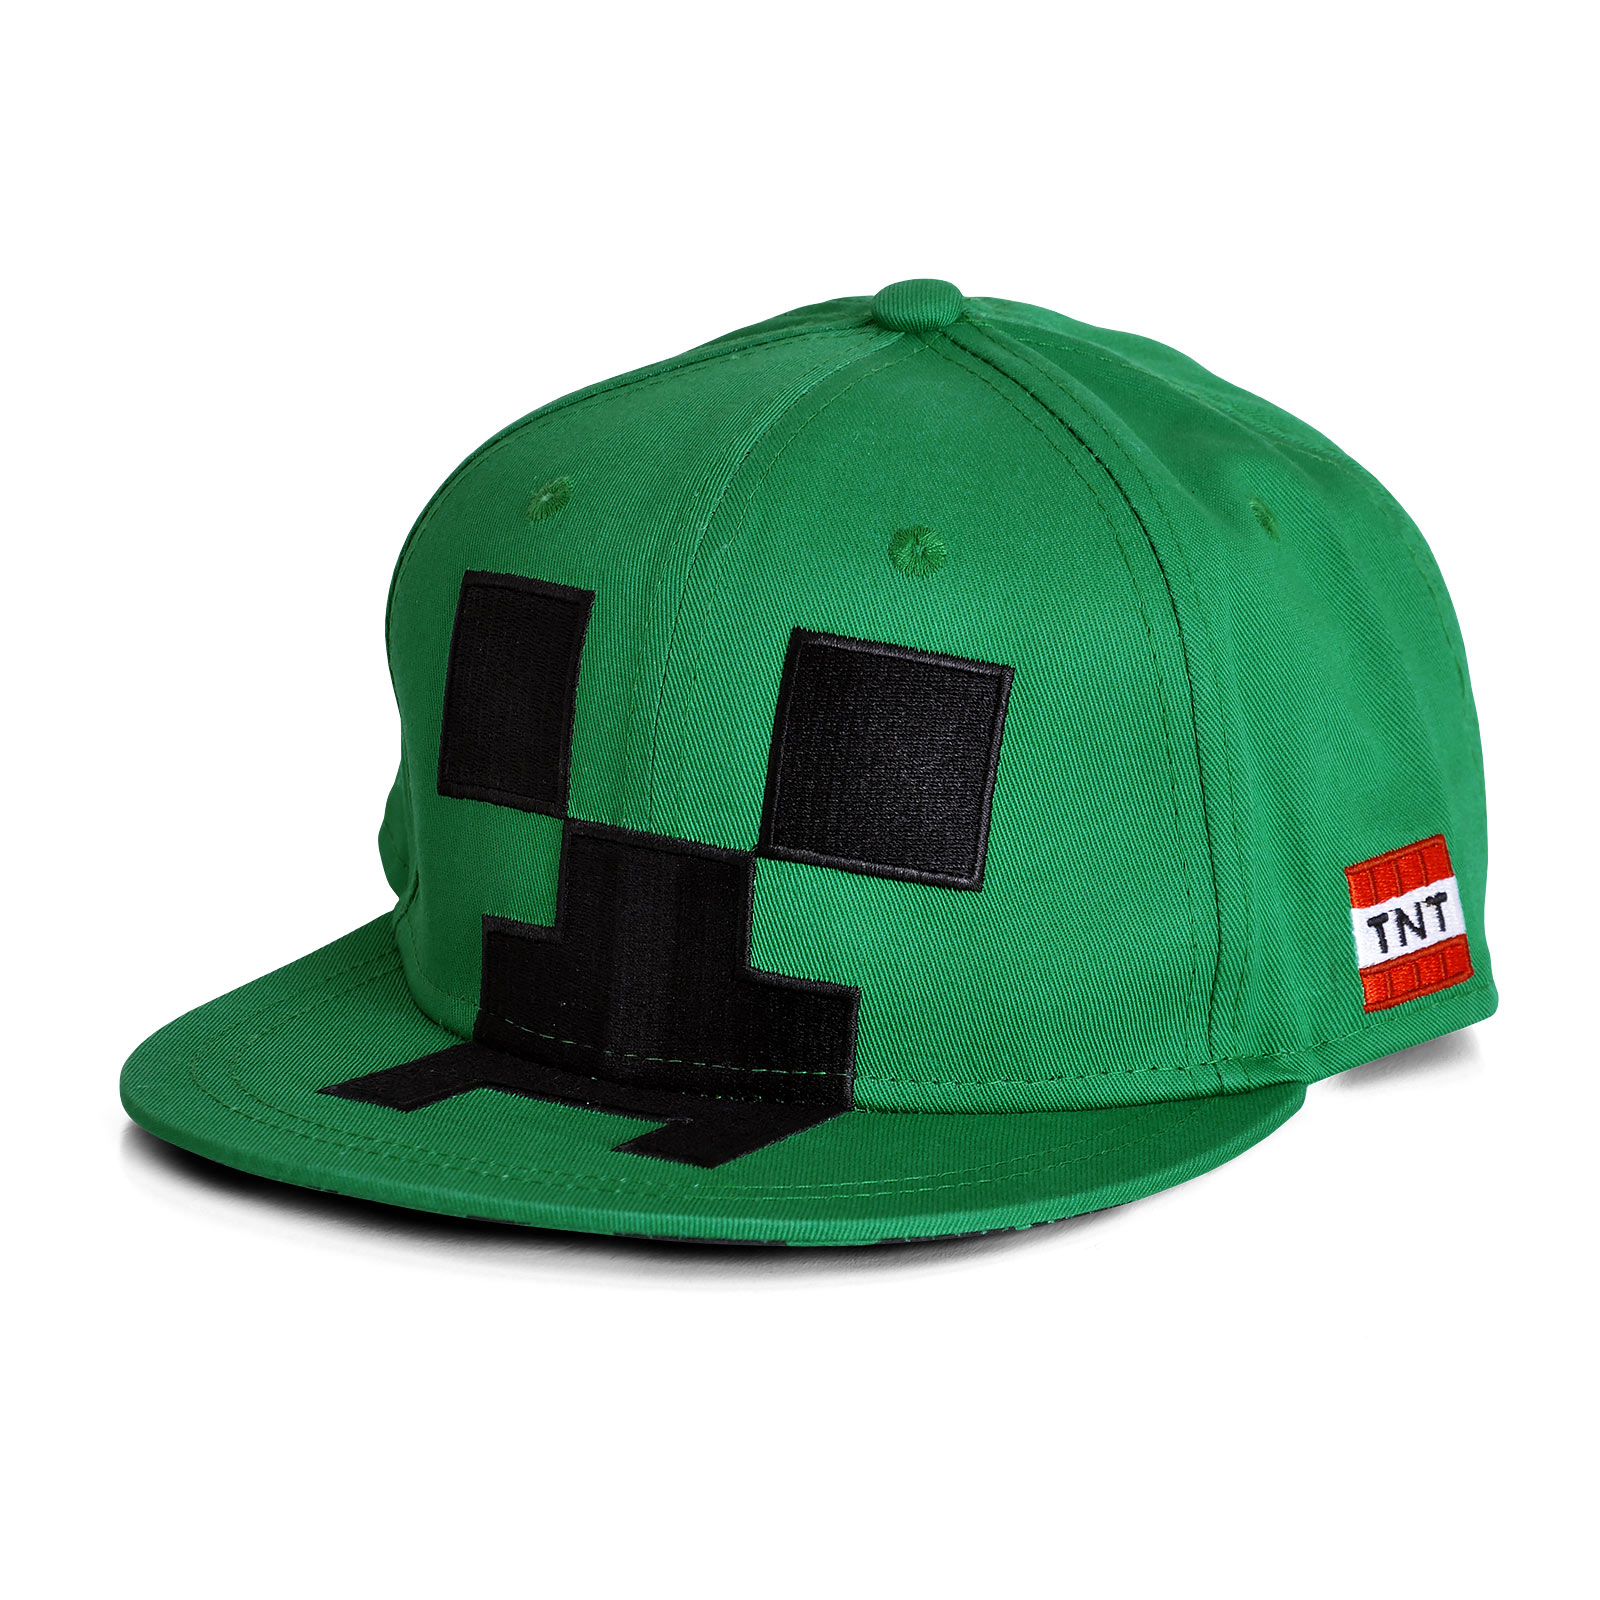 Minecraft - Creeper Snapback Cap for Kids Green